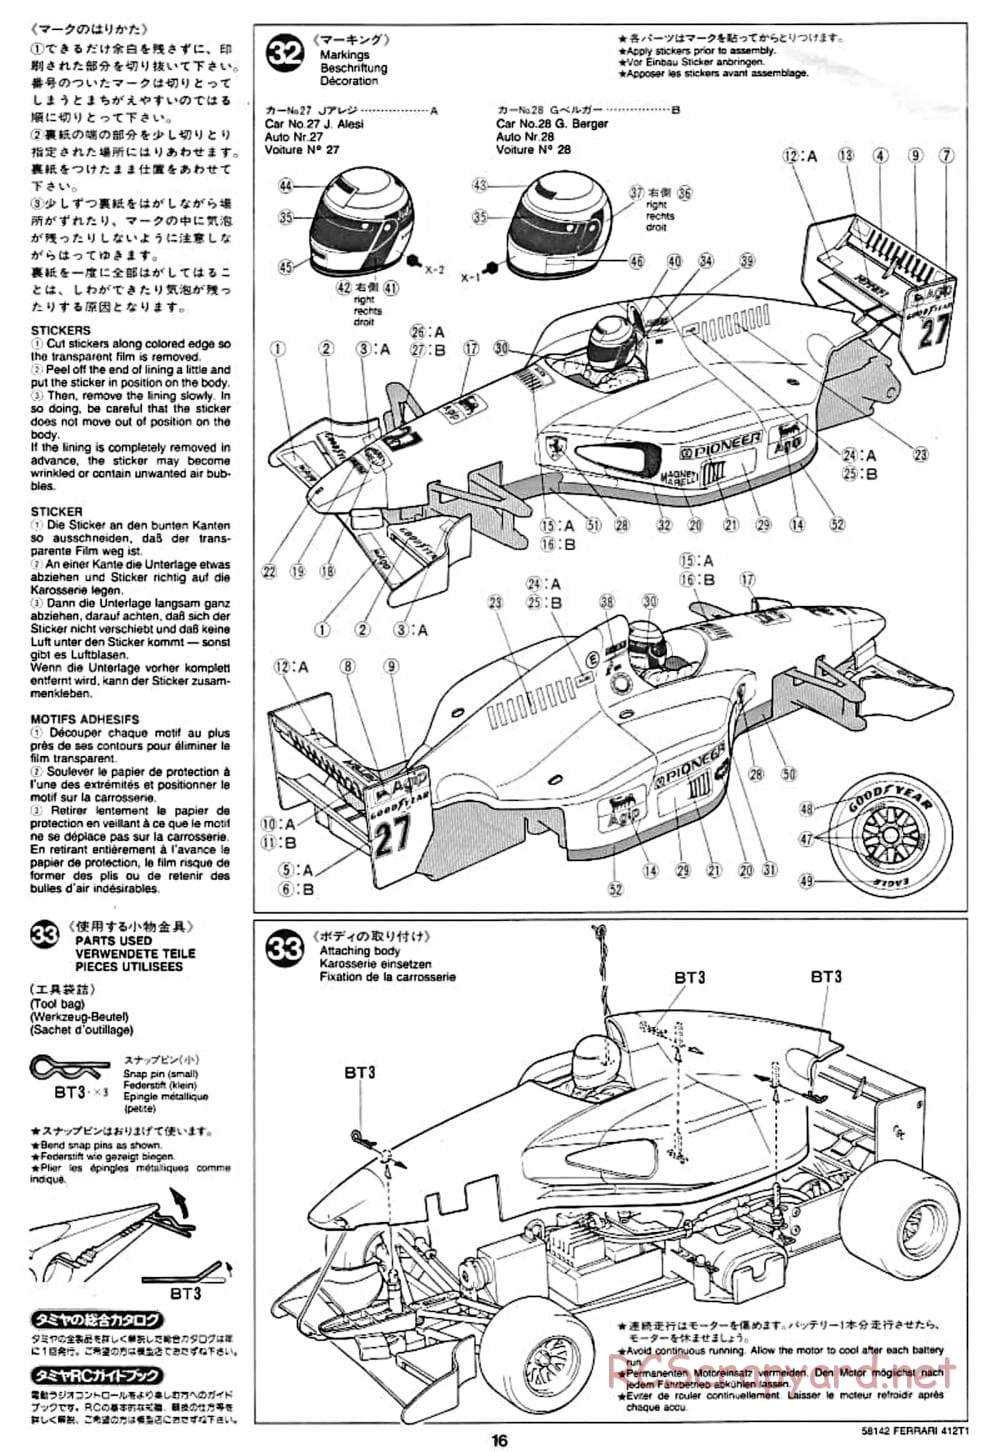 Tamiya - Ferrari 412T1 - F103 Chassis - Manual - Page 16